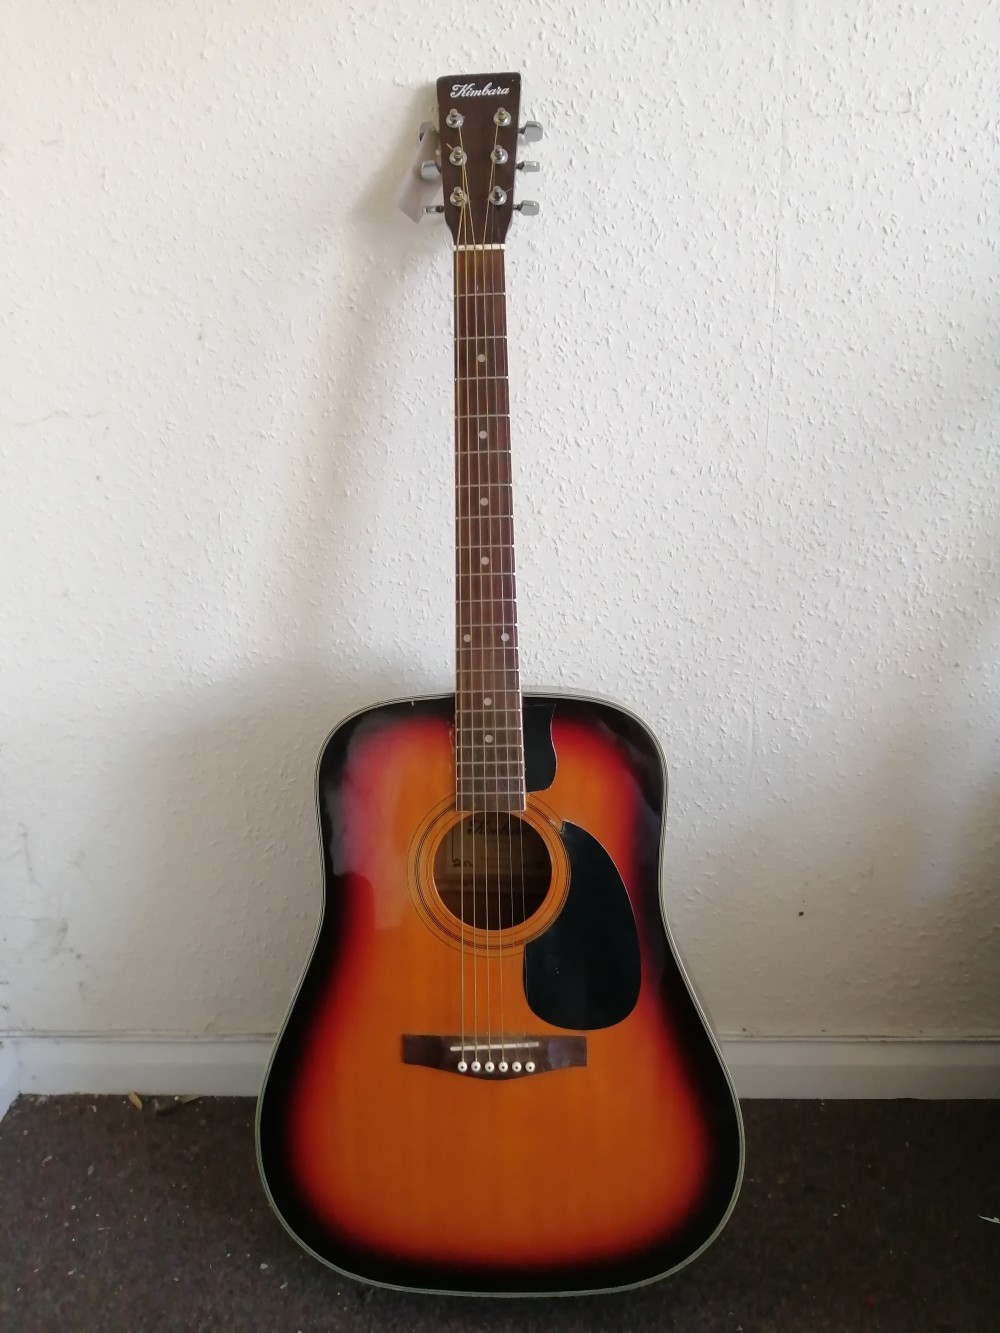 A Kimbara Electro acoustic guitar